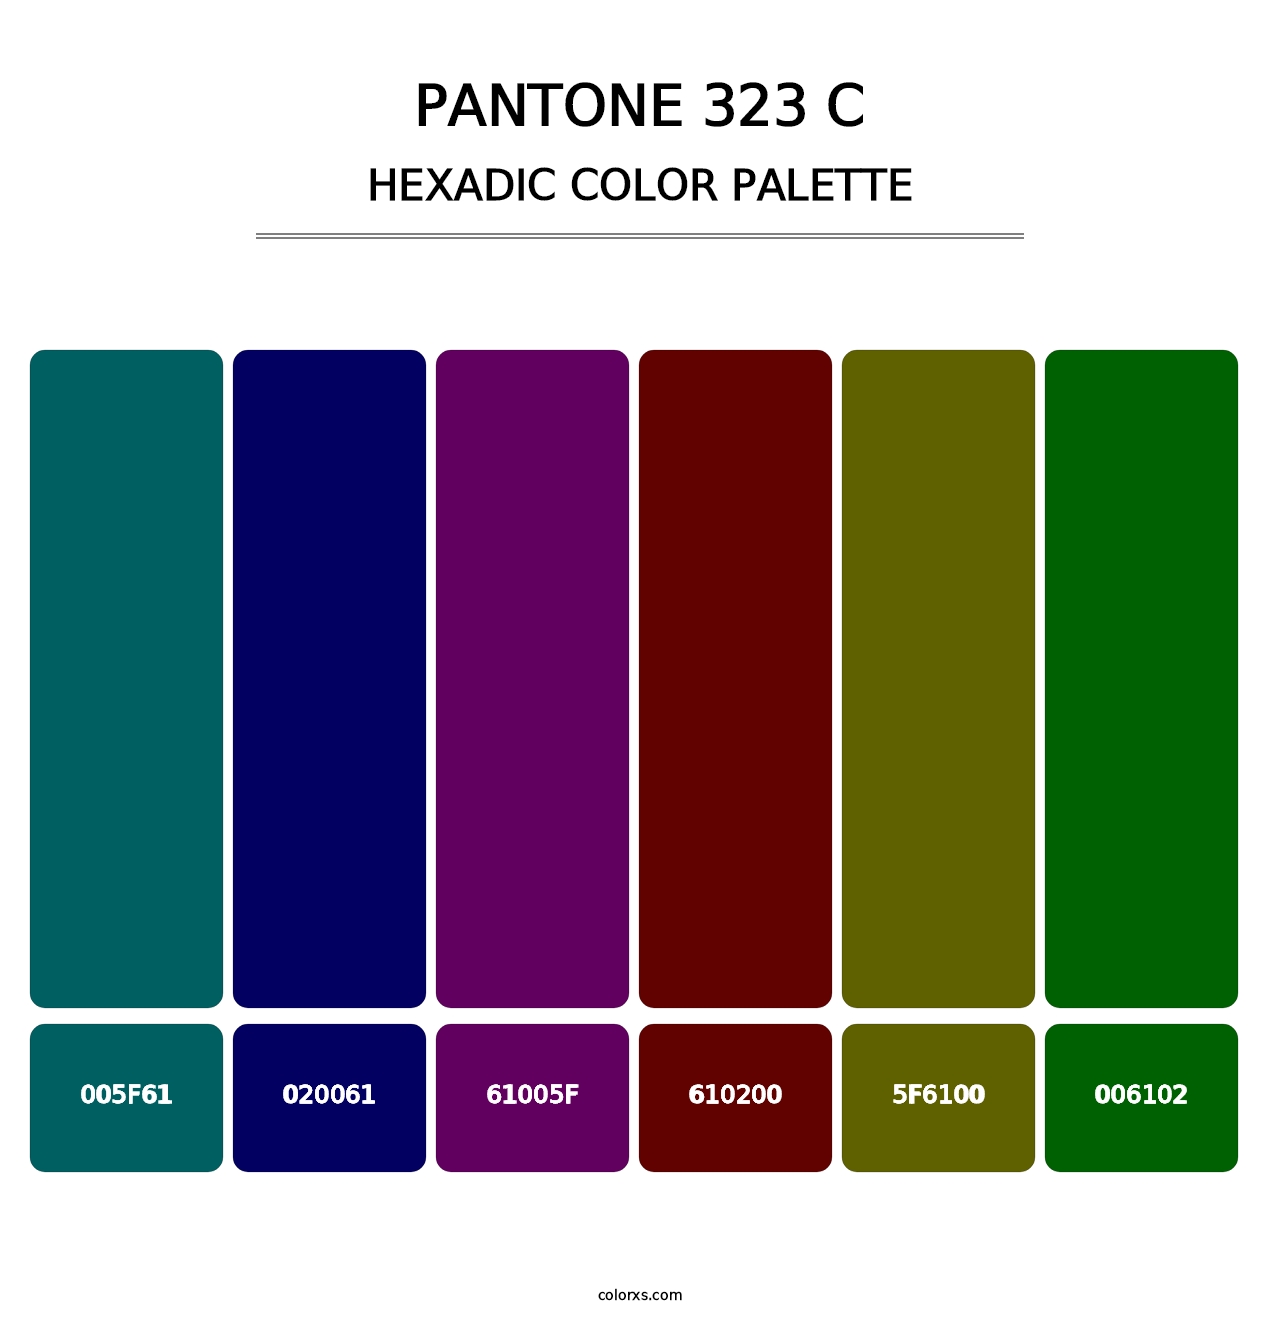 PANTONE 323 C - Hexadic Color Palette